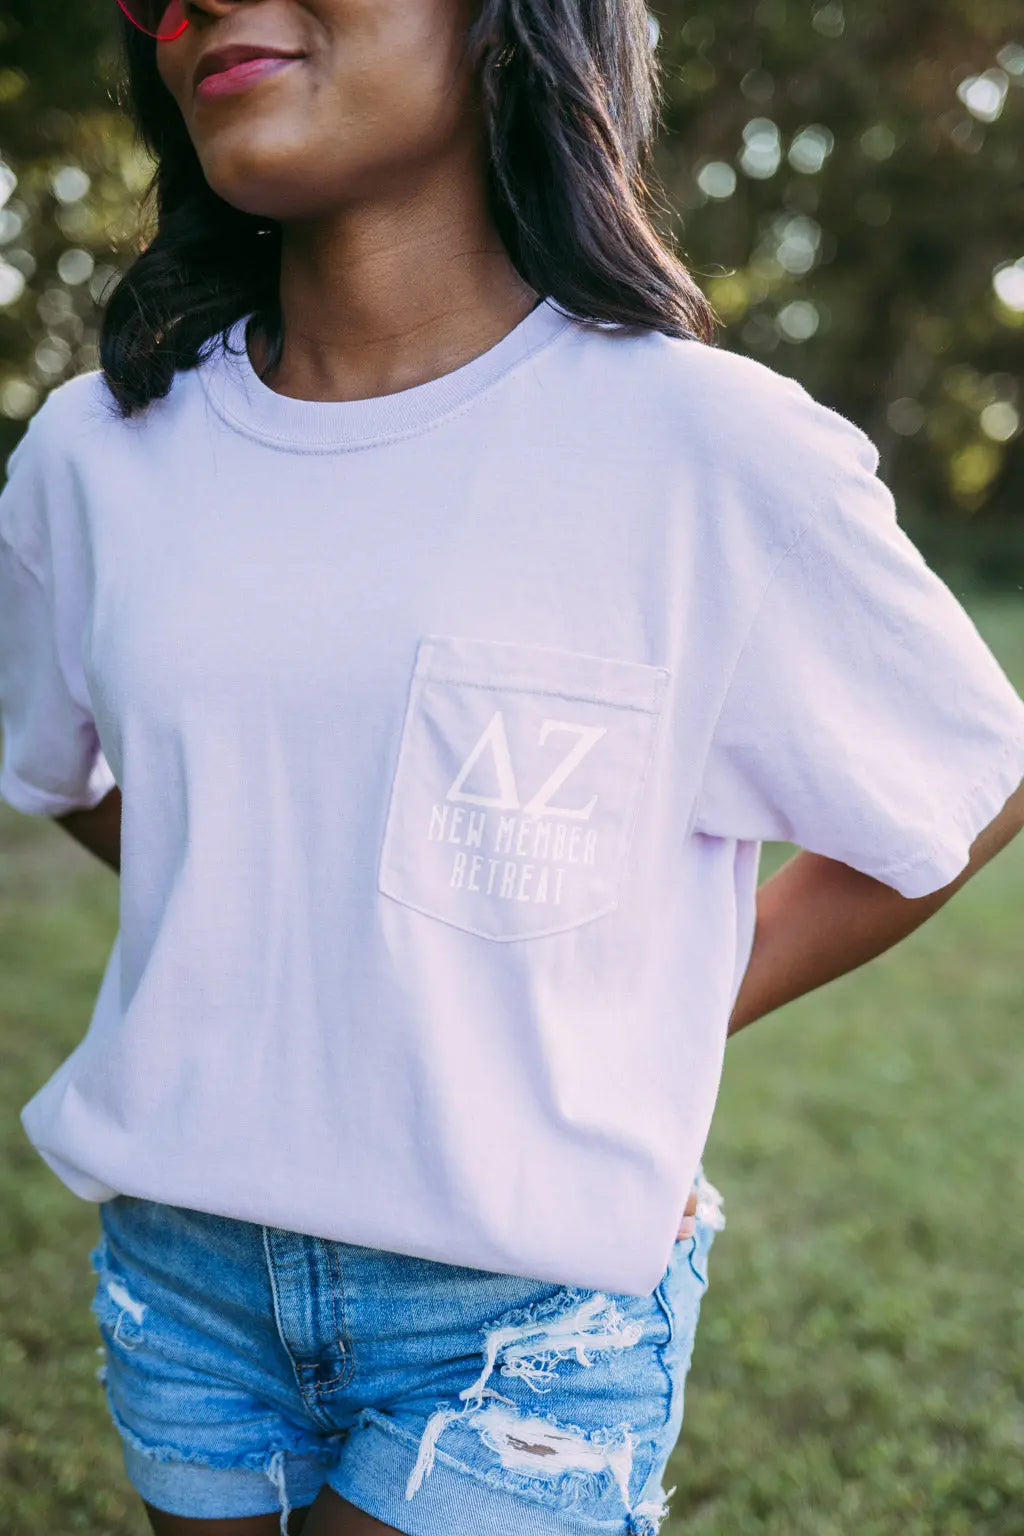 DZ New Member Retreat Camp Tshirt